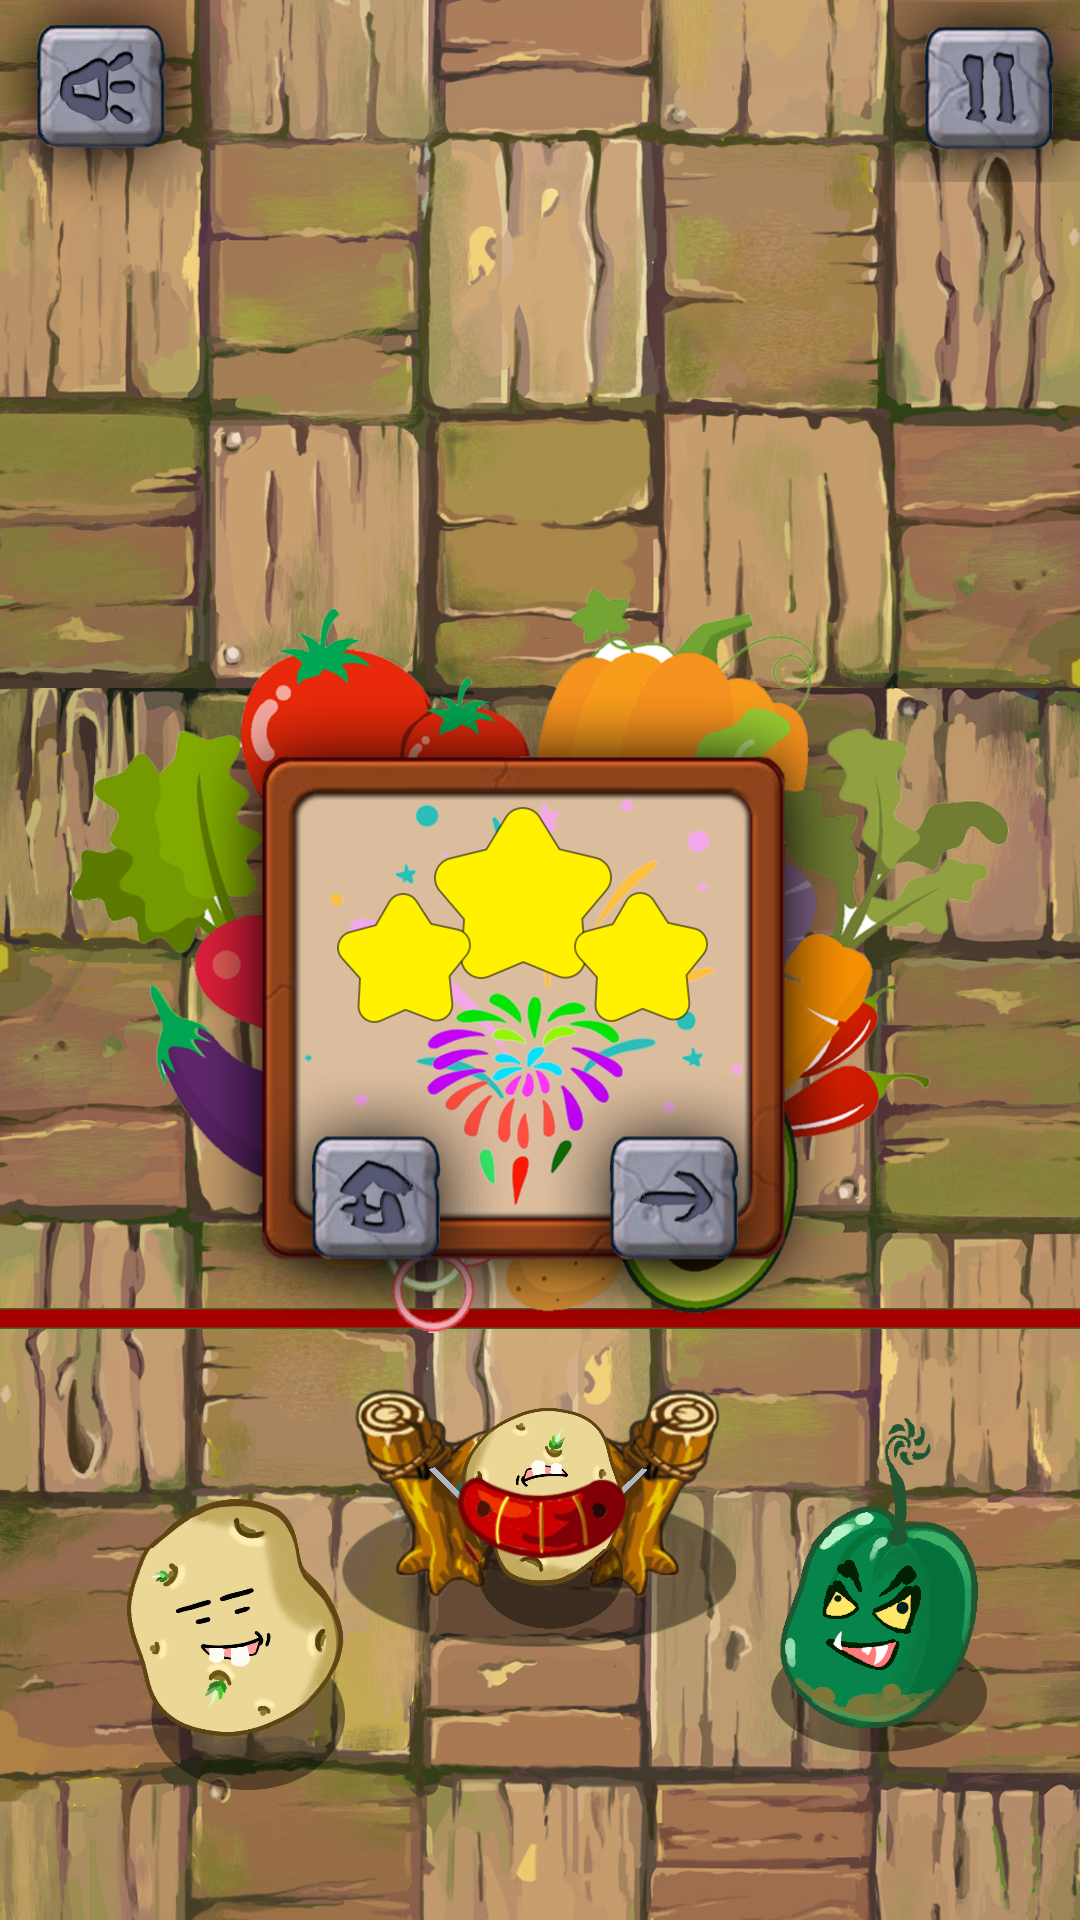 Fingertip Winner screenshot game